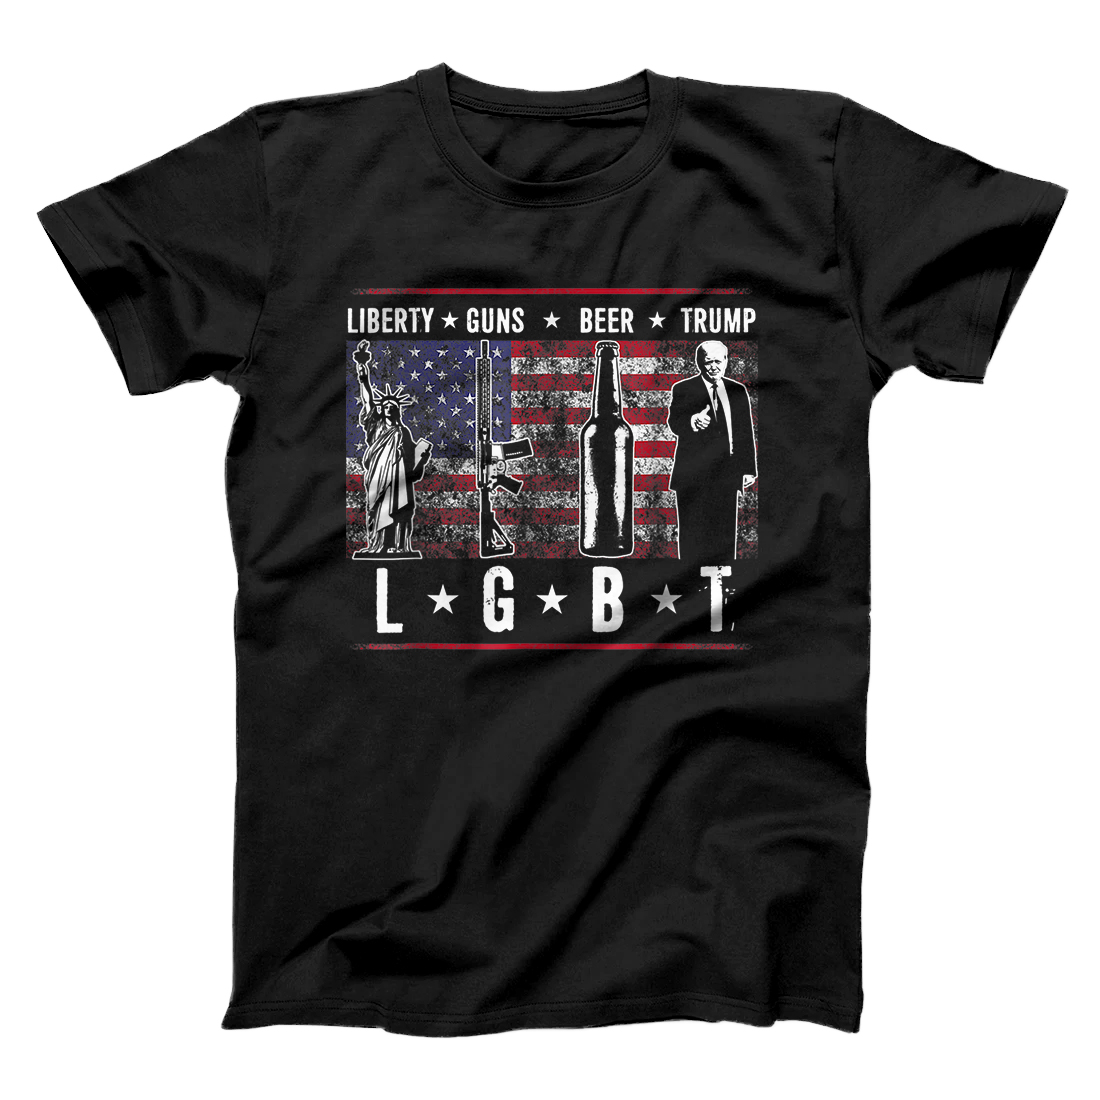 Personalized Liberty Guns Beer Trump TShirt LGBT Parody T-Shirt